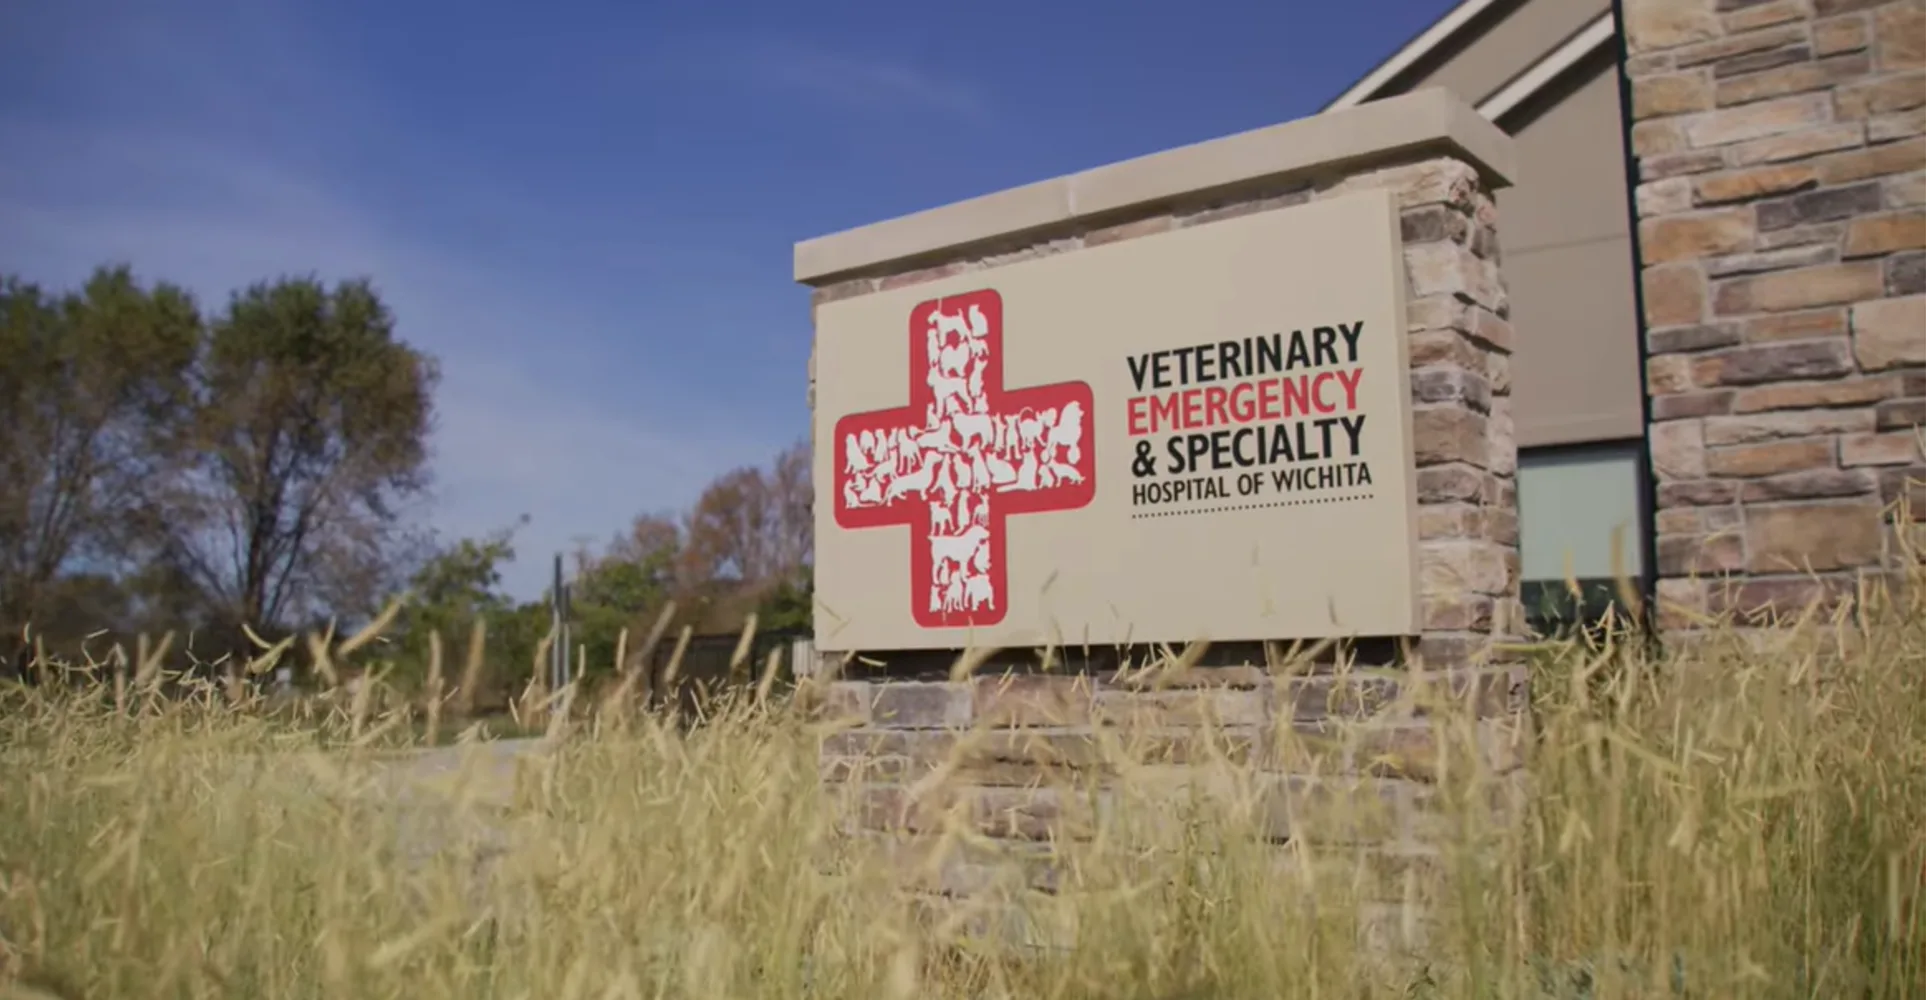 Veterinary Emergency & Specialty Hospital (VESH) Wichita YouTube Screenshot.